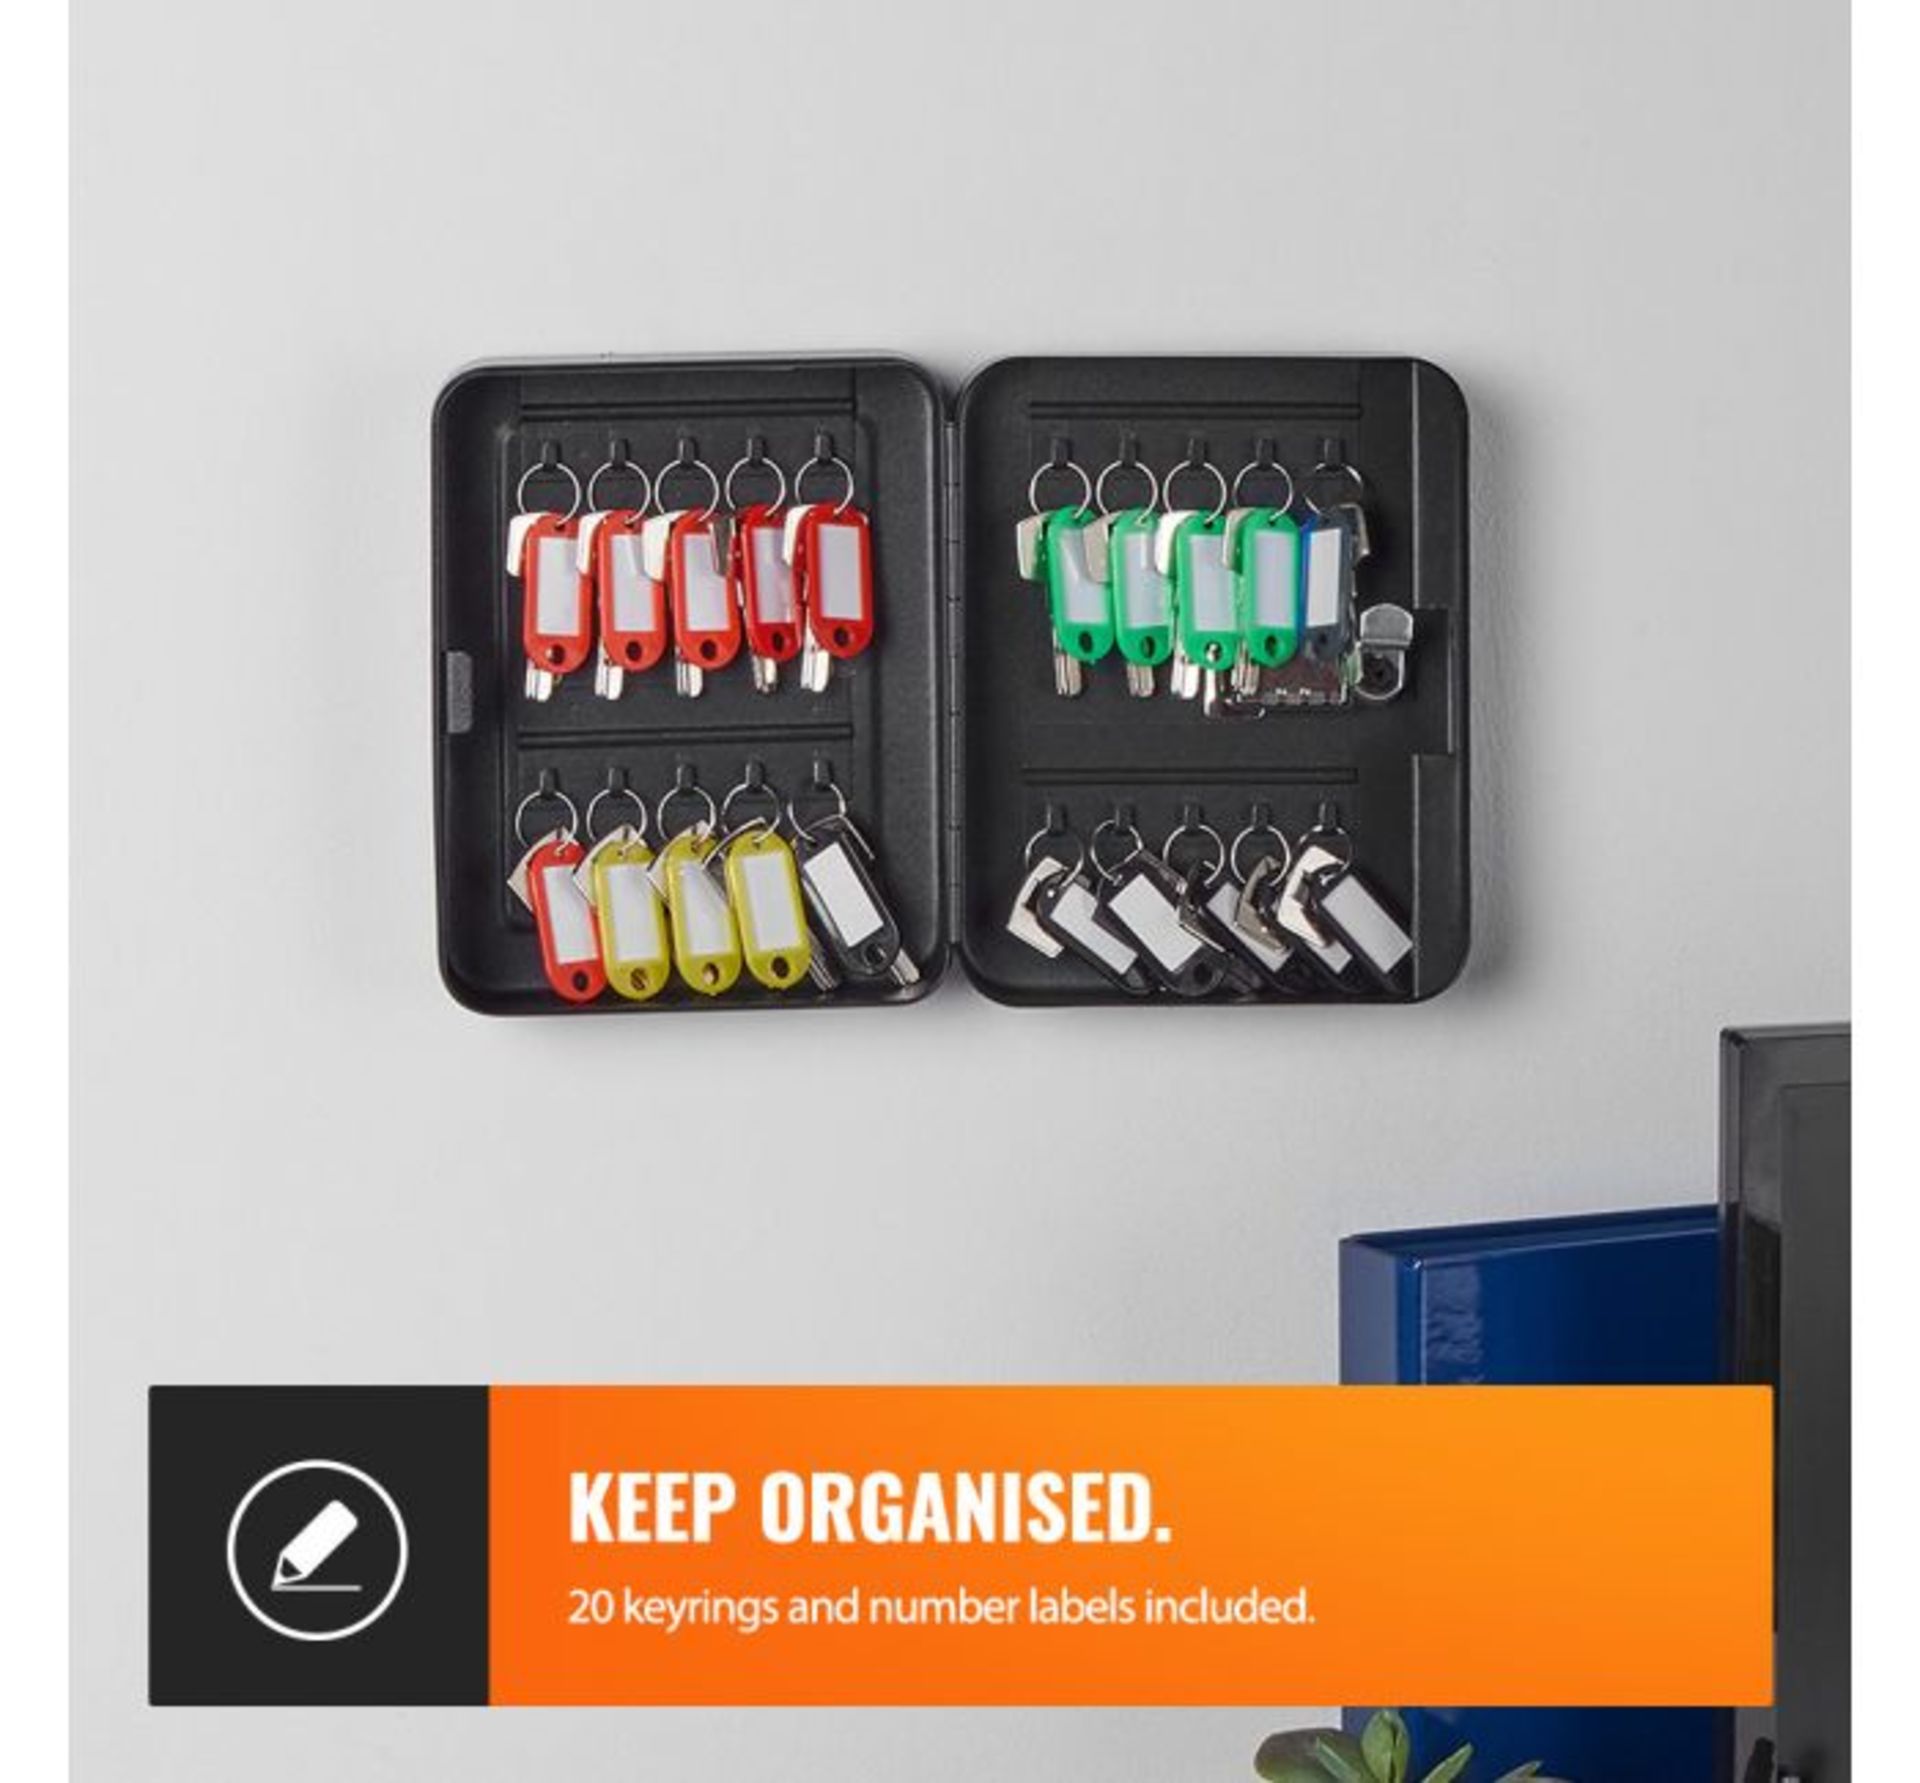 (OM129) 20 Key Cabinet Safe Store up to 20 keys on individual hooks, complete with keyring lab...